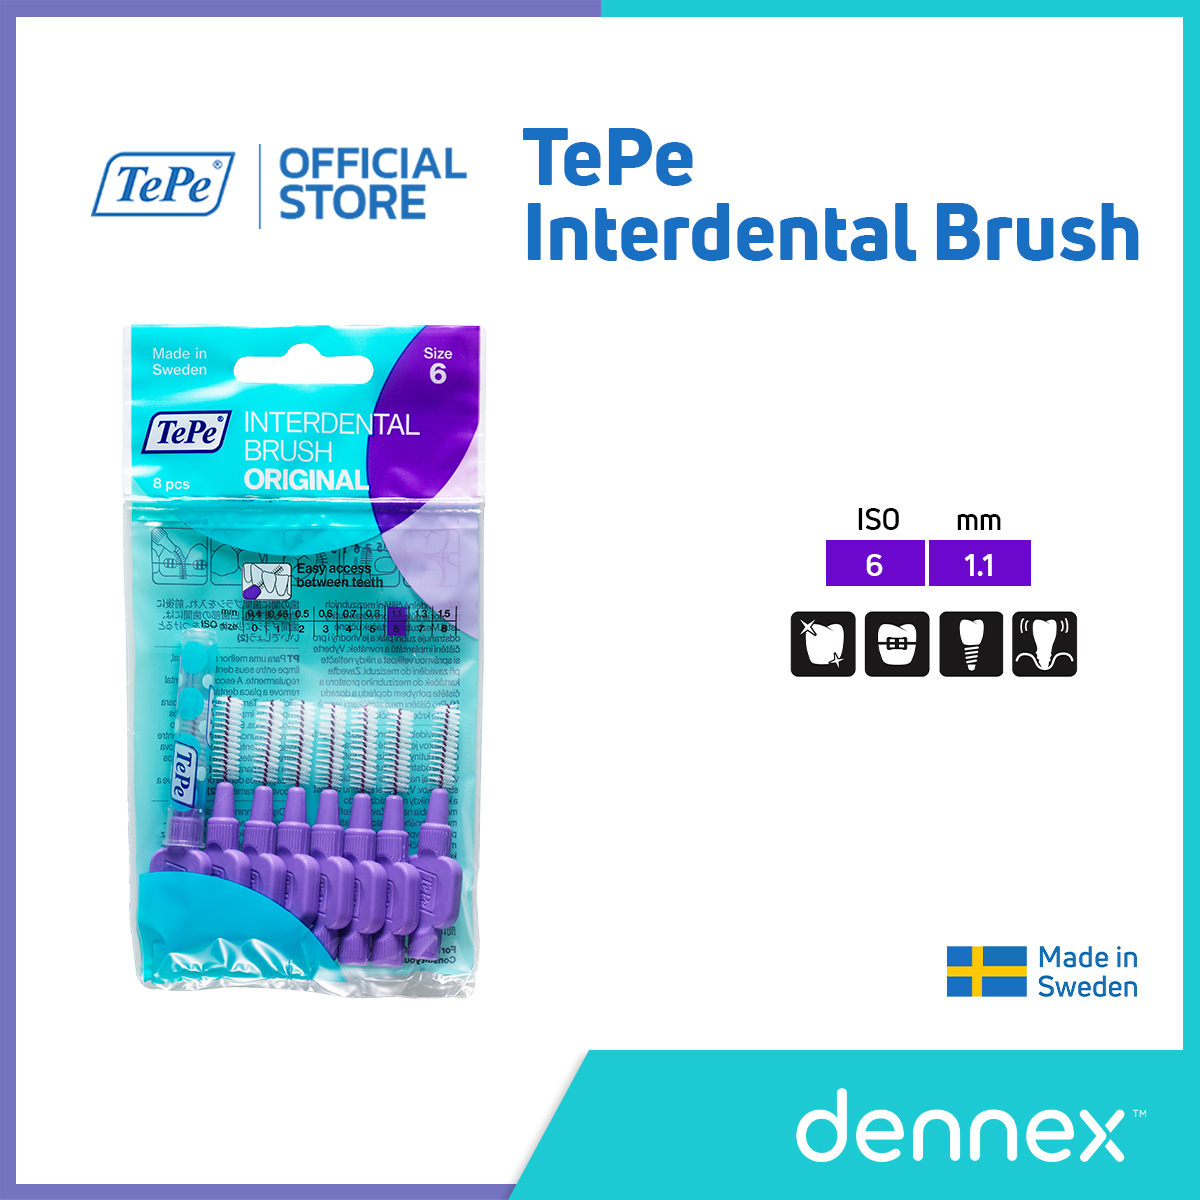 TePe Interdental Brush แปรงซอกฟัน ขนนุ่ม แปรงซอกฟันเทเป้ อินเทอร์เด็นทัล บลัช รุ่นออริจินัล แพ็ค 8 ชิ้น By Dennex